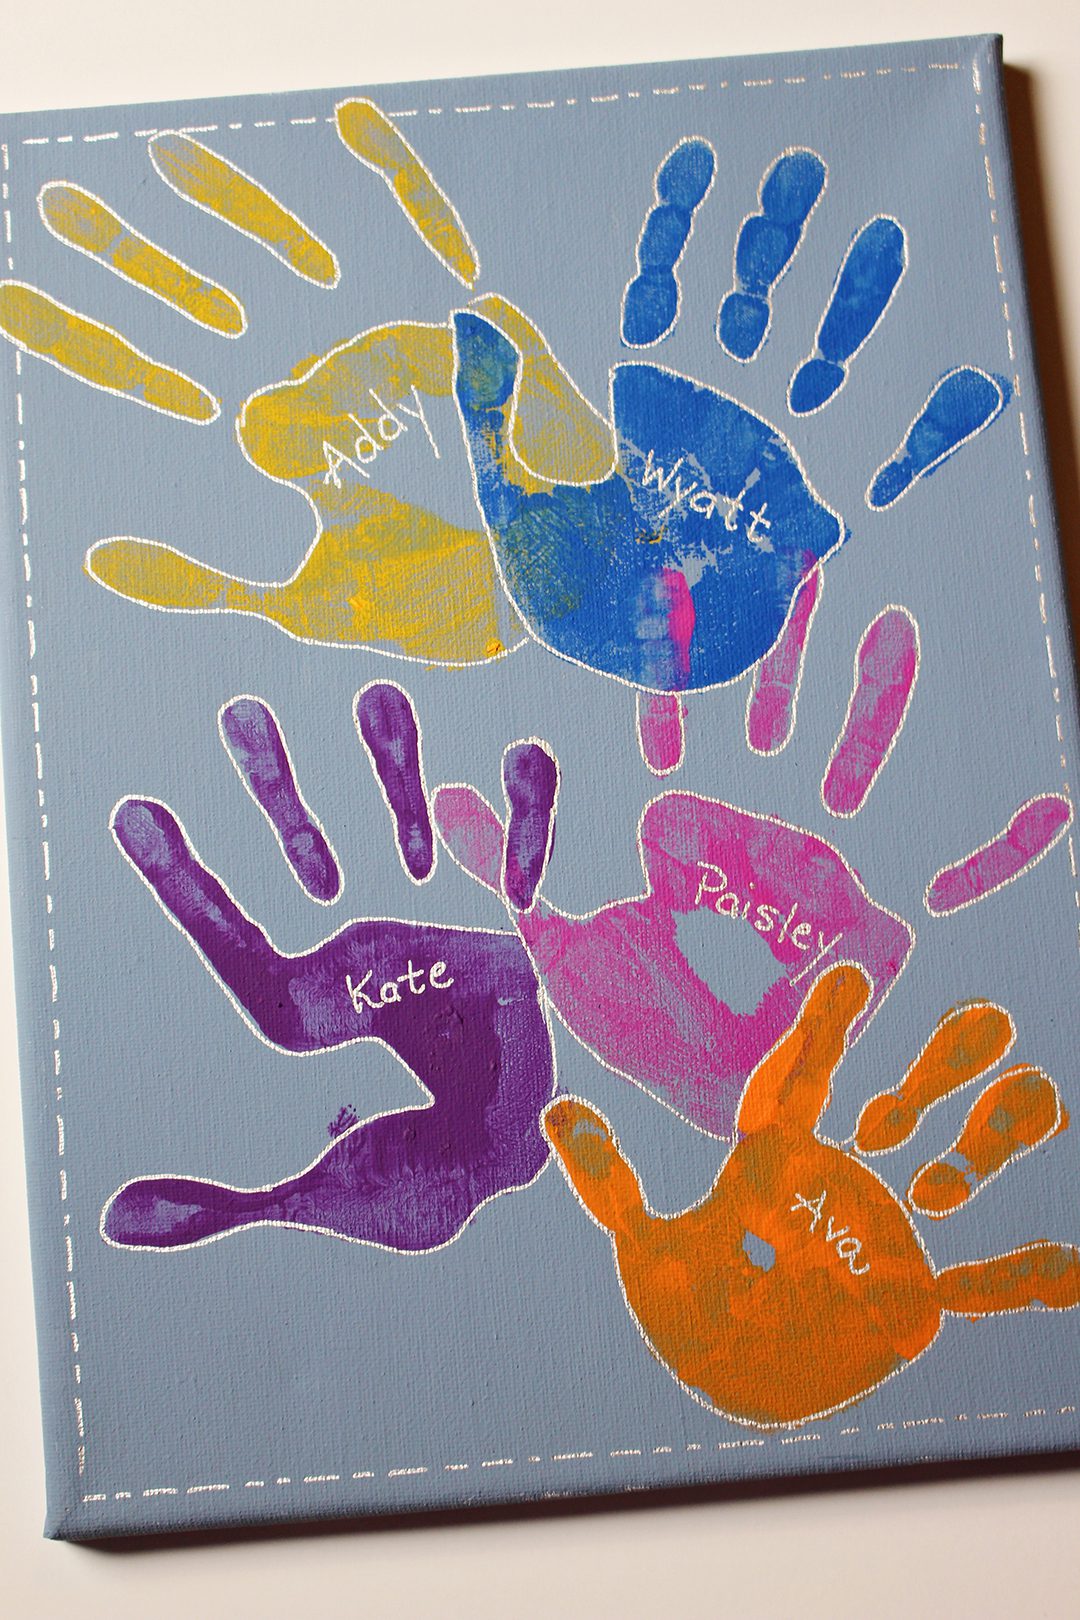 Finger Paint Name Art Craft For Preschoolers